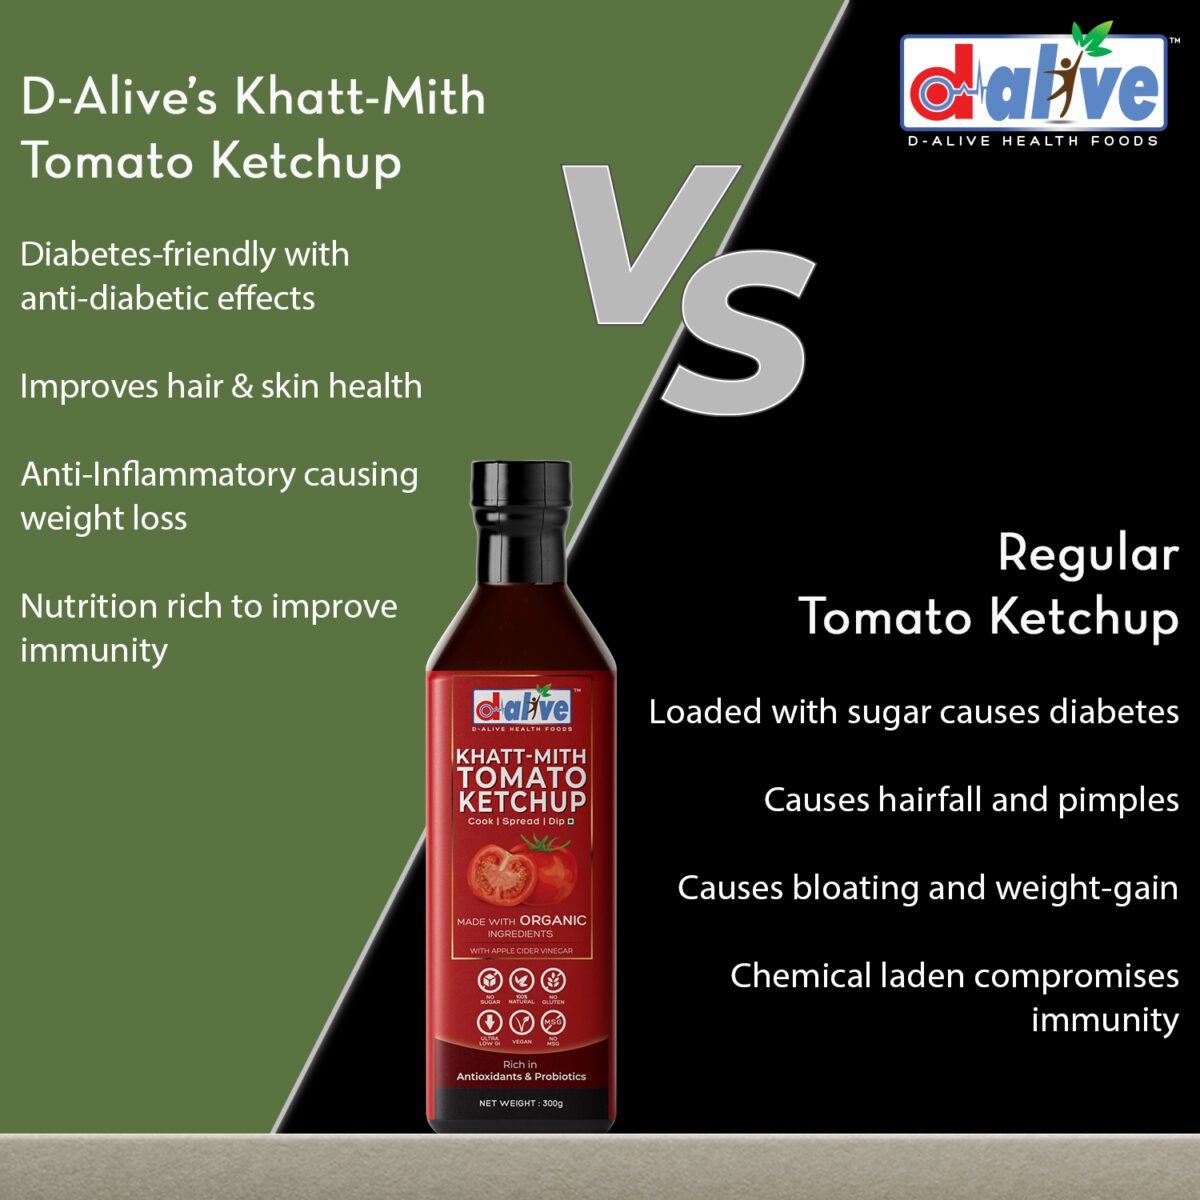 Khat-Mith-Tomato-Ketchup-Comparison-D-alive